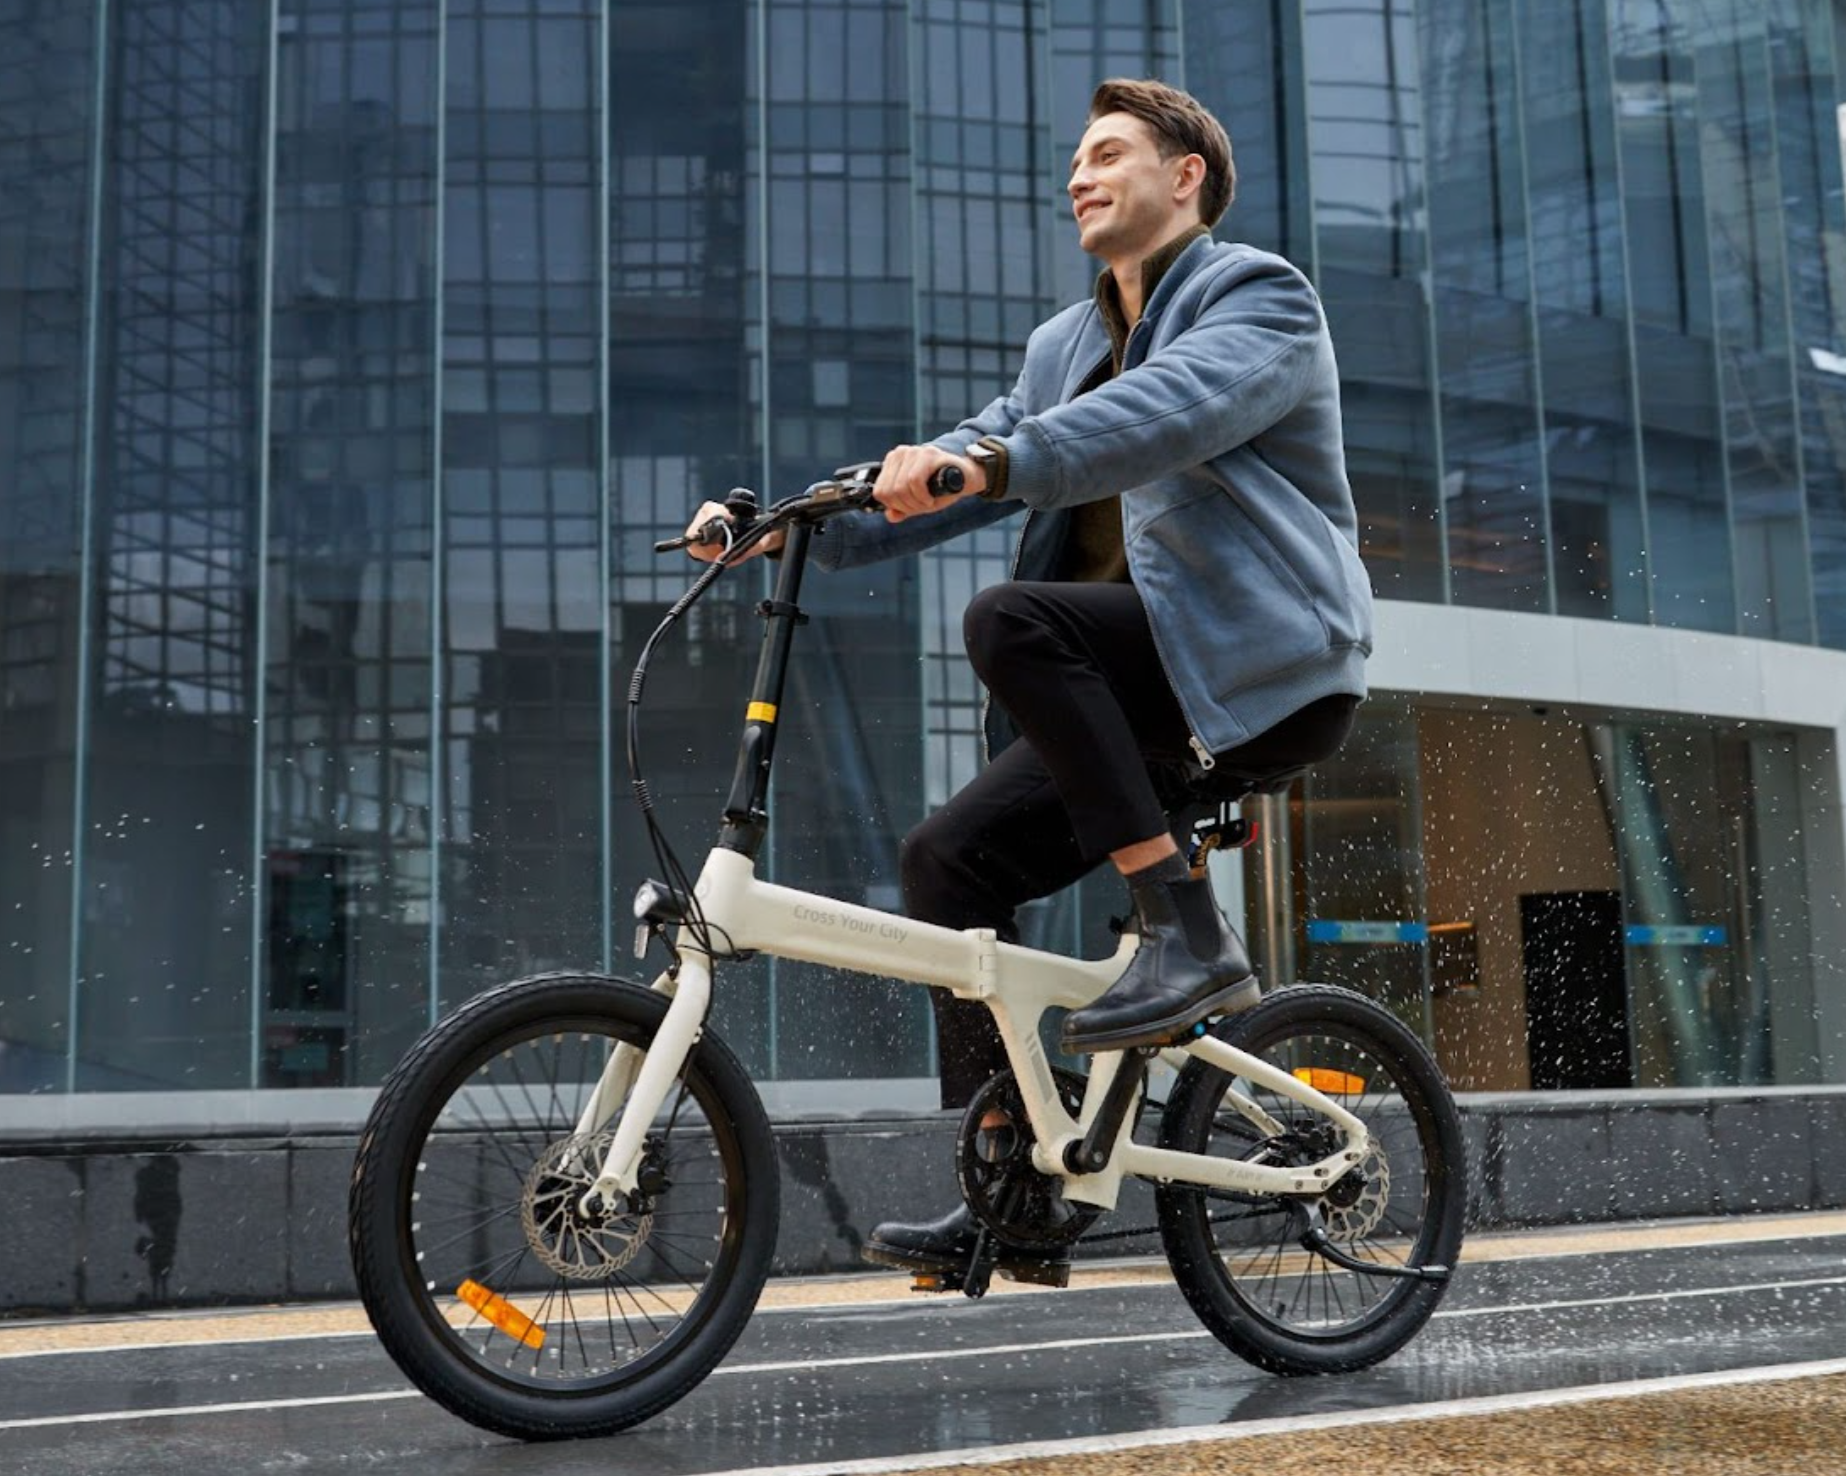 ADO-Air-vorgestellt-16kg-leichtes-City-E-Bike